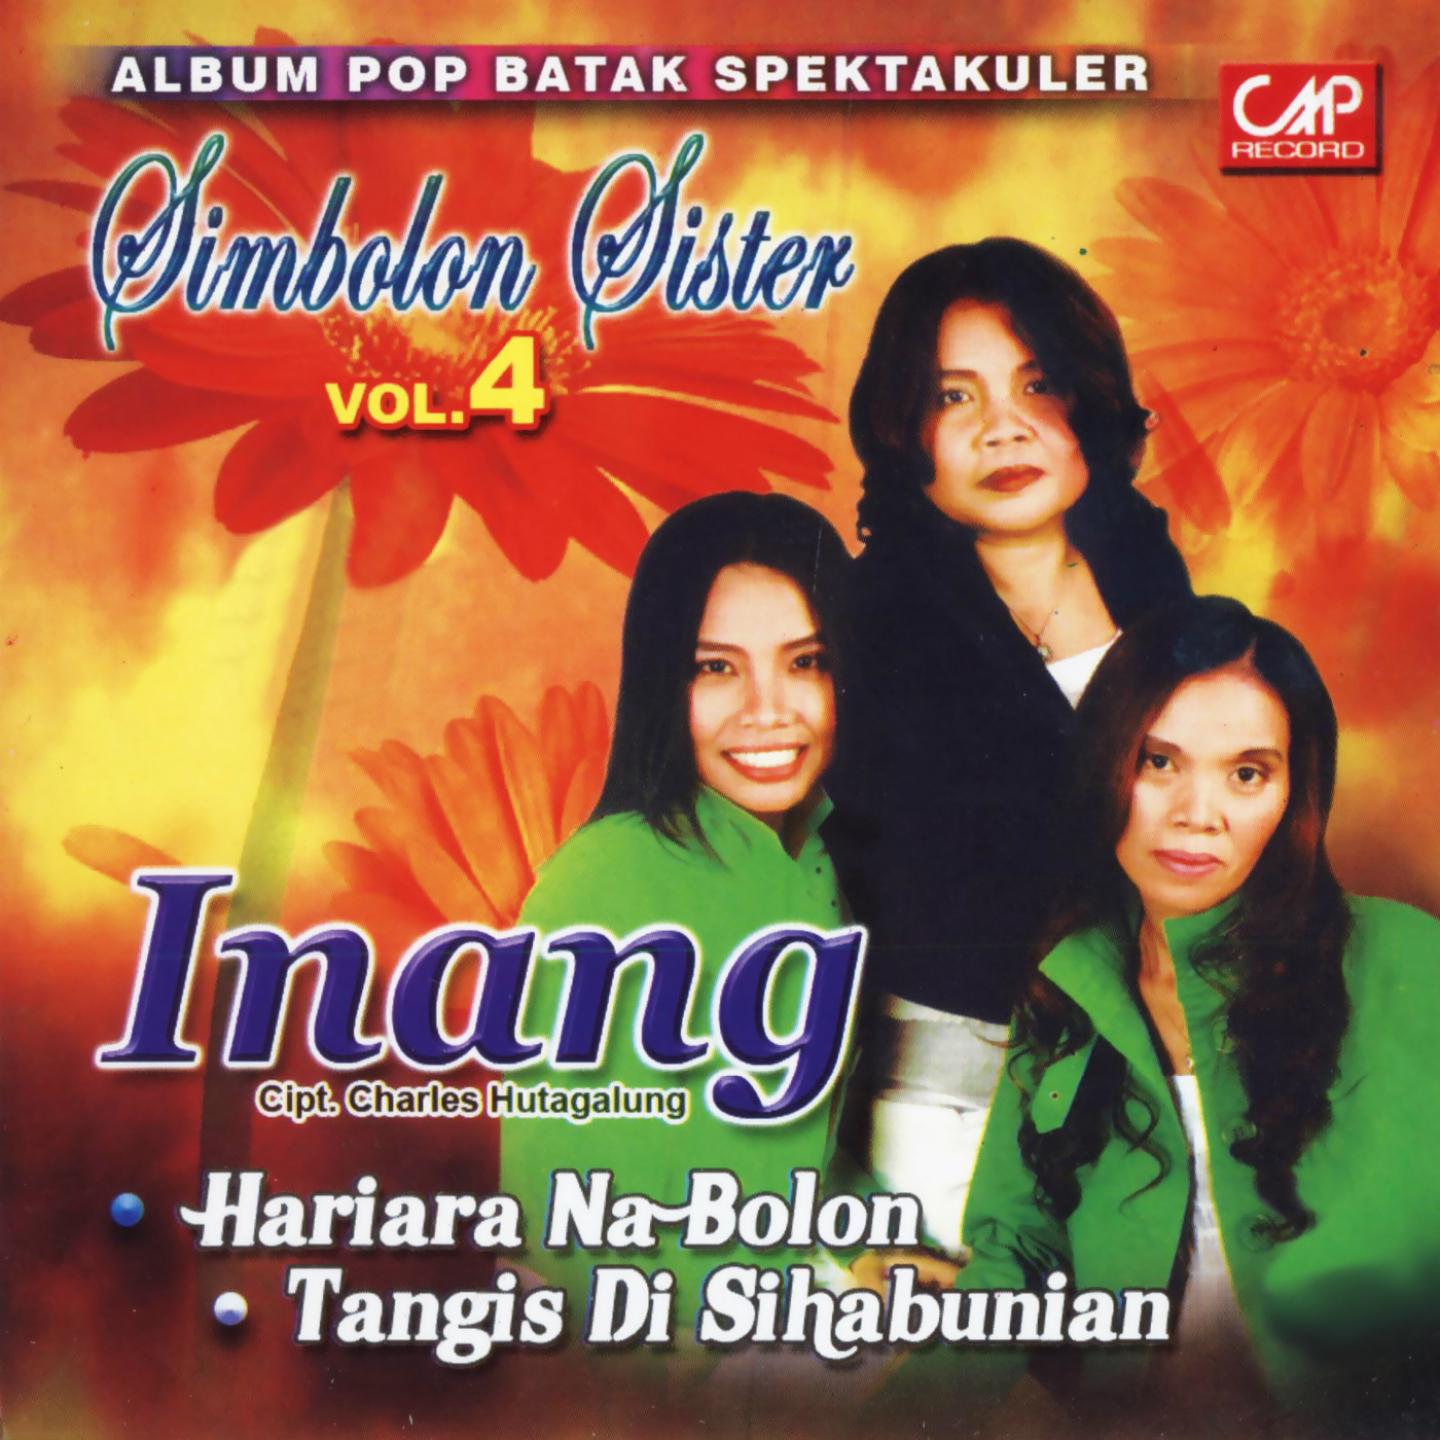 Постер альбома Simbolon Sister, Vol. 4 - Pop Batak Spektakuler